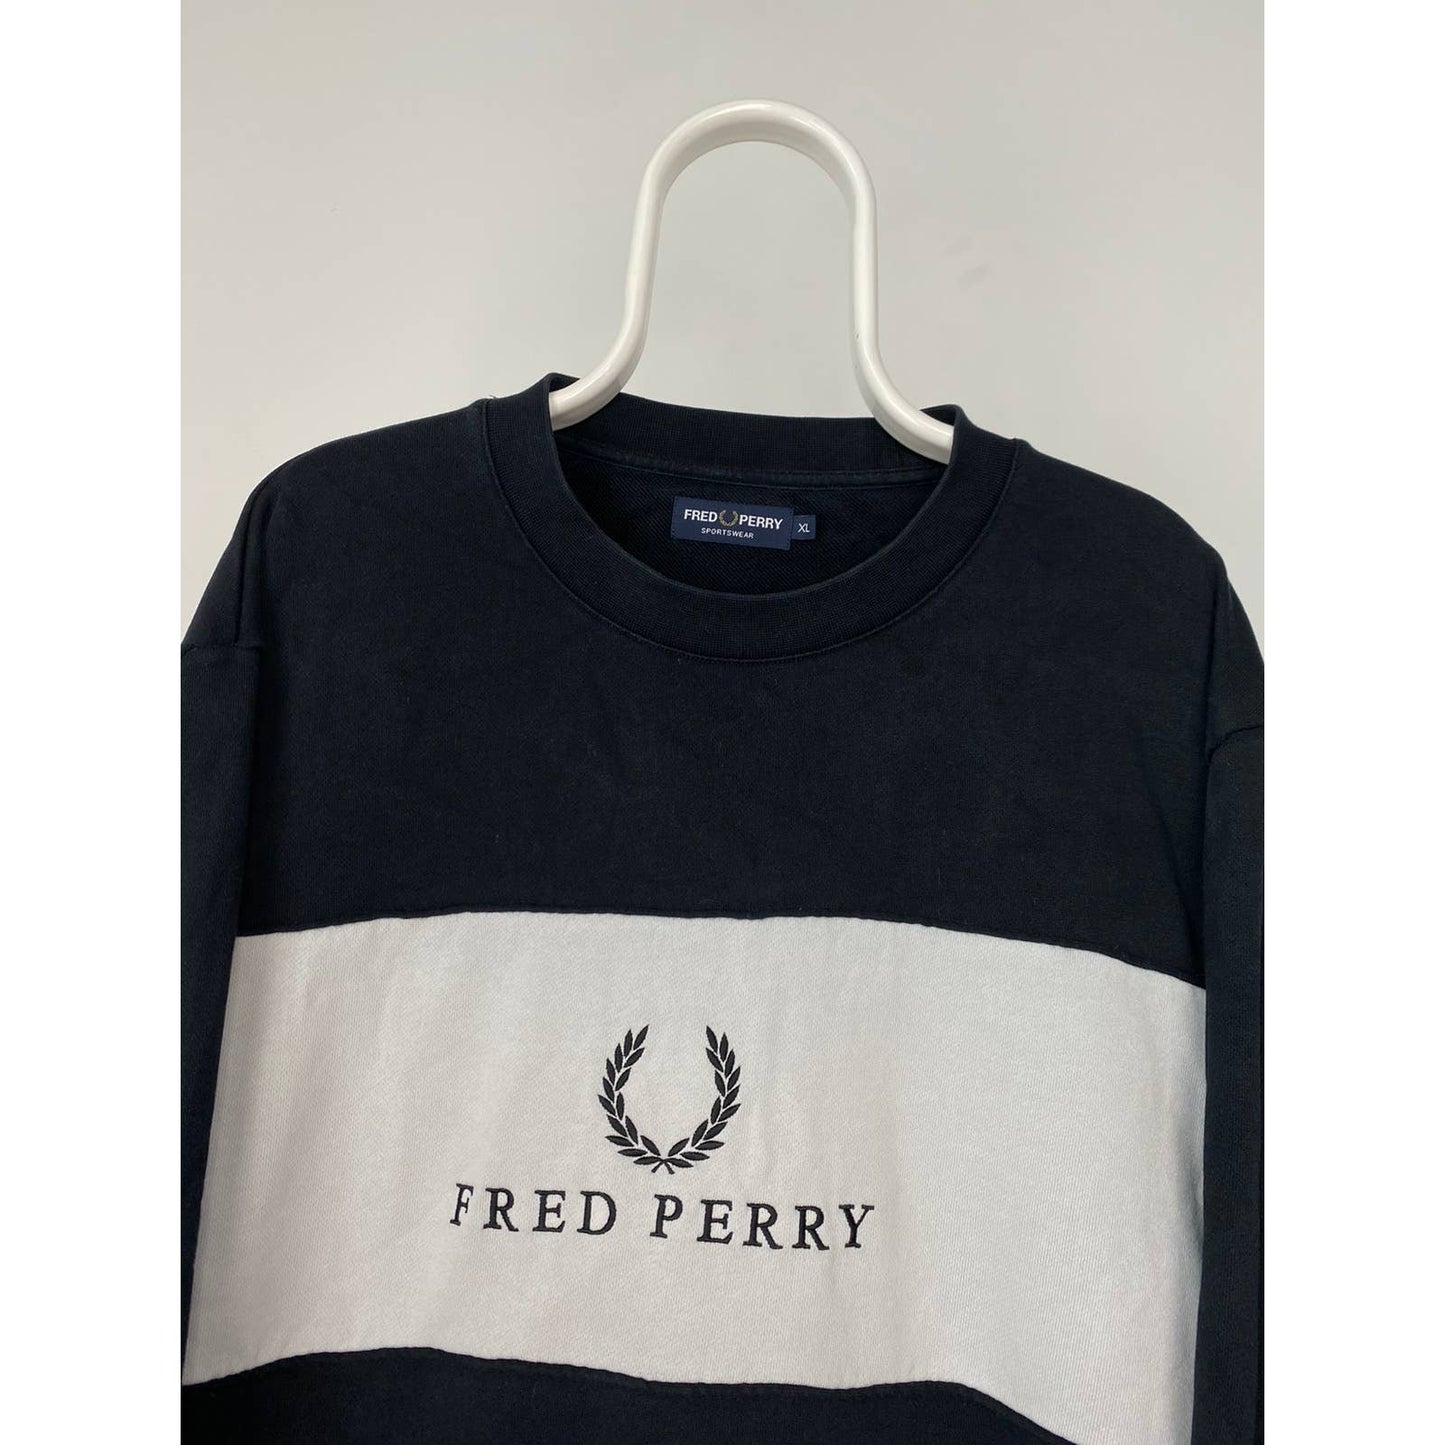 Fred Perry vintage black sweatshirt big logo spell out Y2K